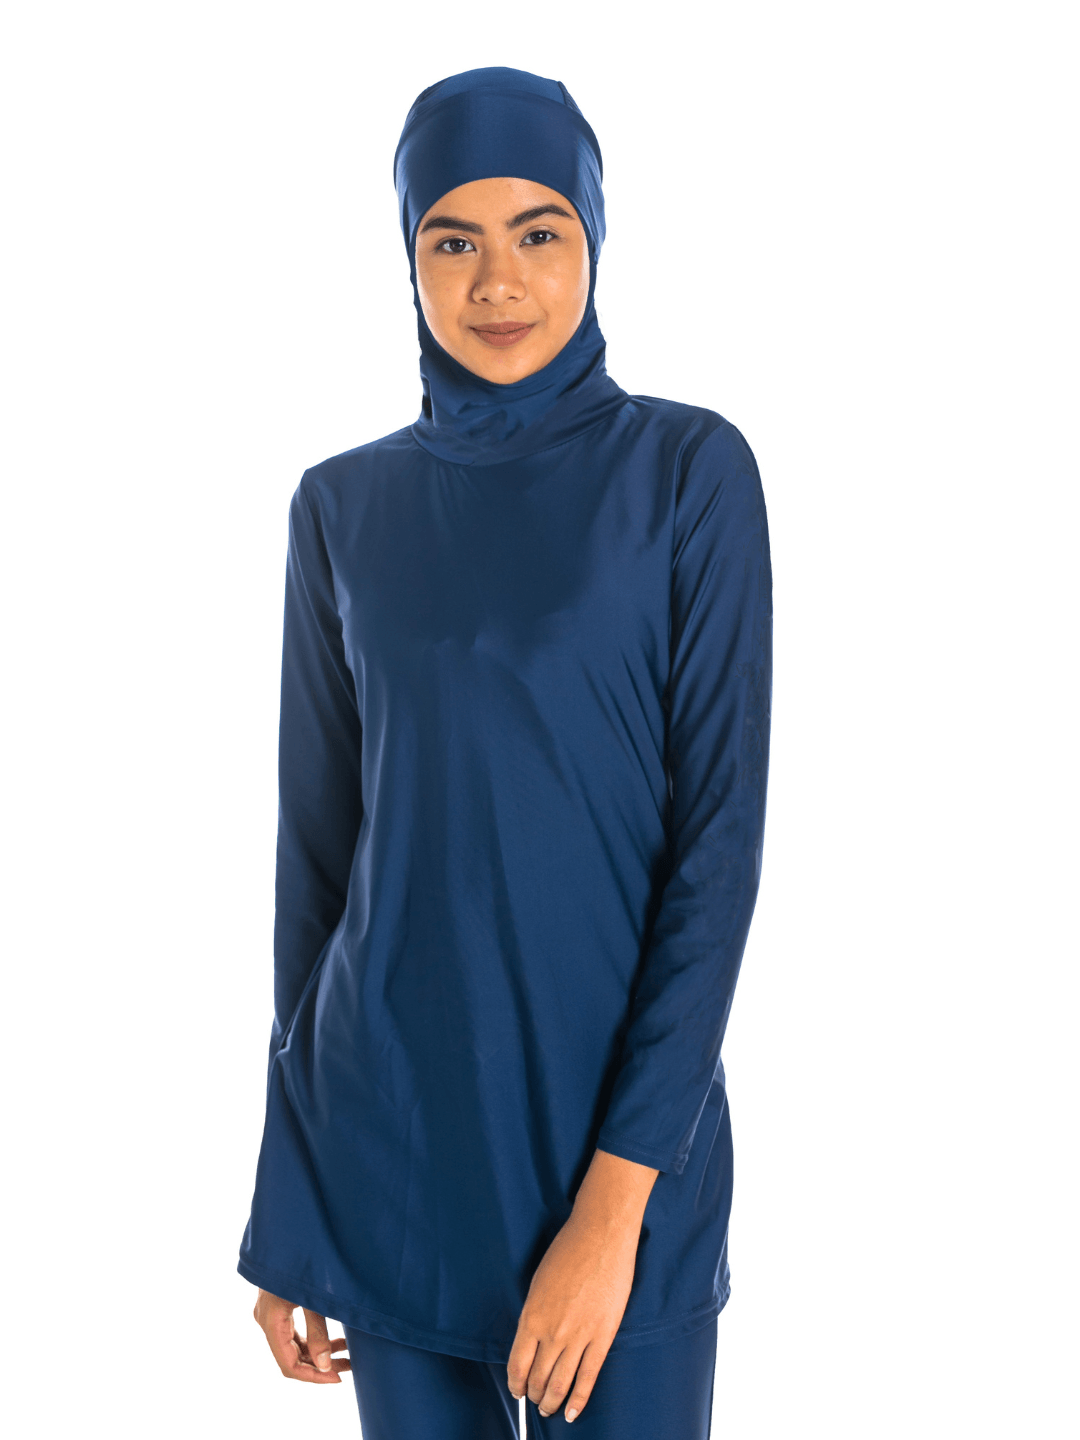 Modernly Modest Melur Muslimah Swimwear Set Navy Blue (Plus Size Available) - Pink N' Proper